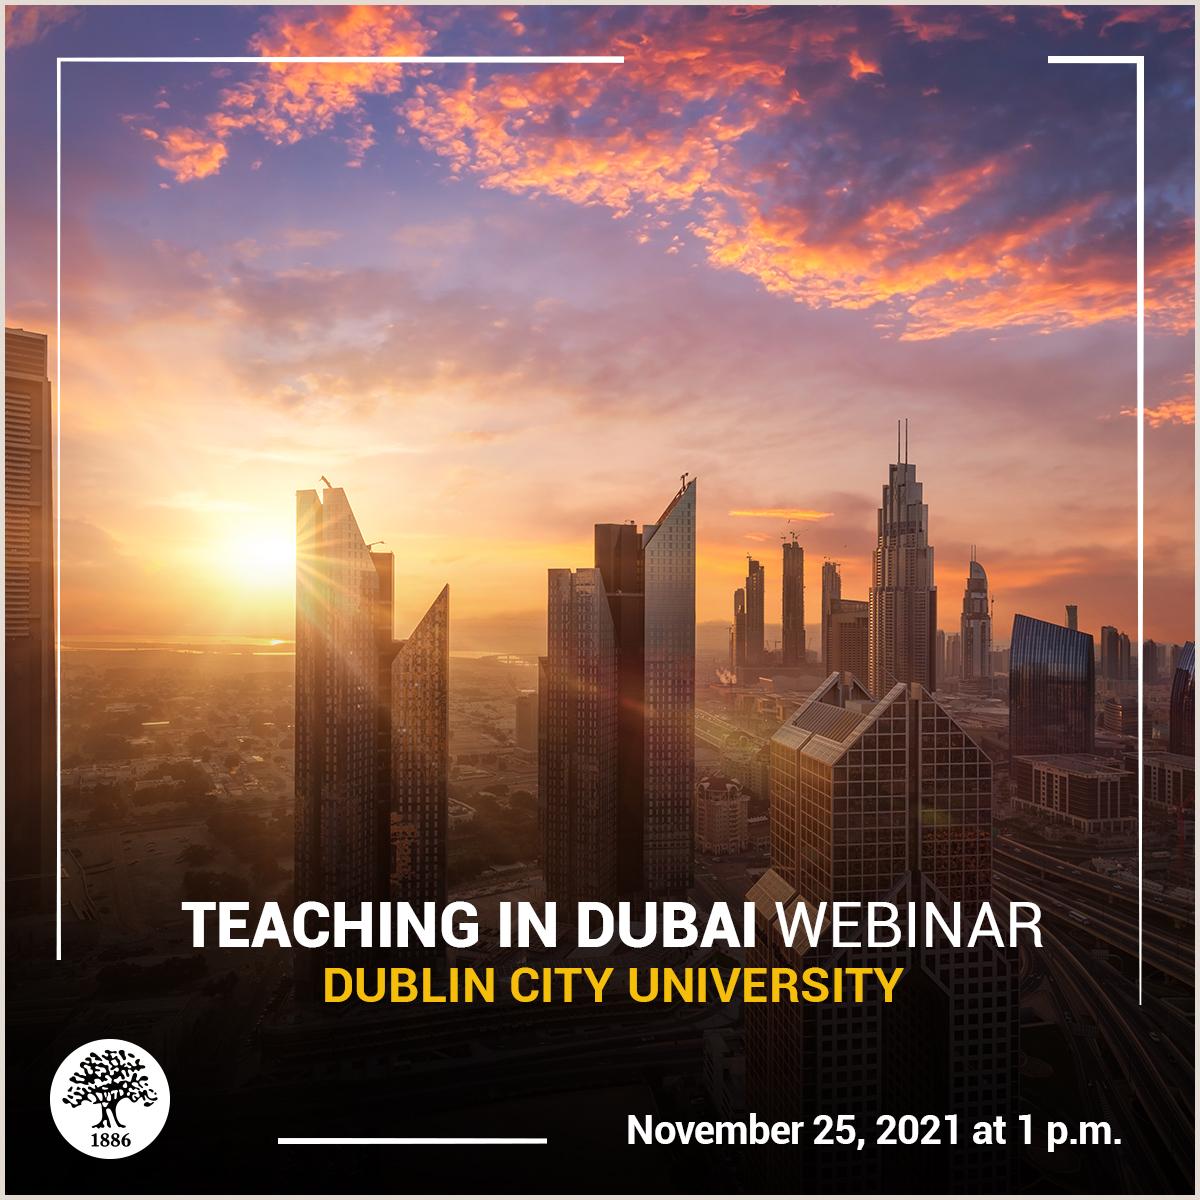 Teaching in Dubai Webinar text with Dubai buildings and skyline in the background